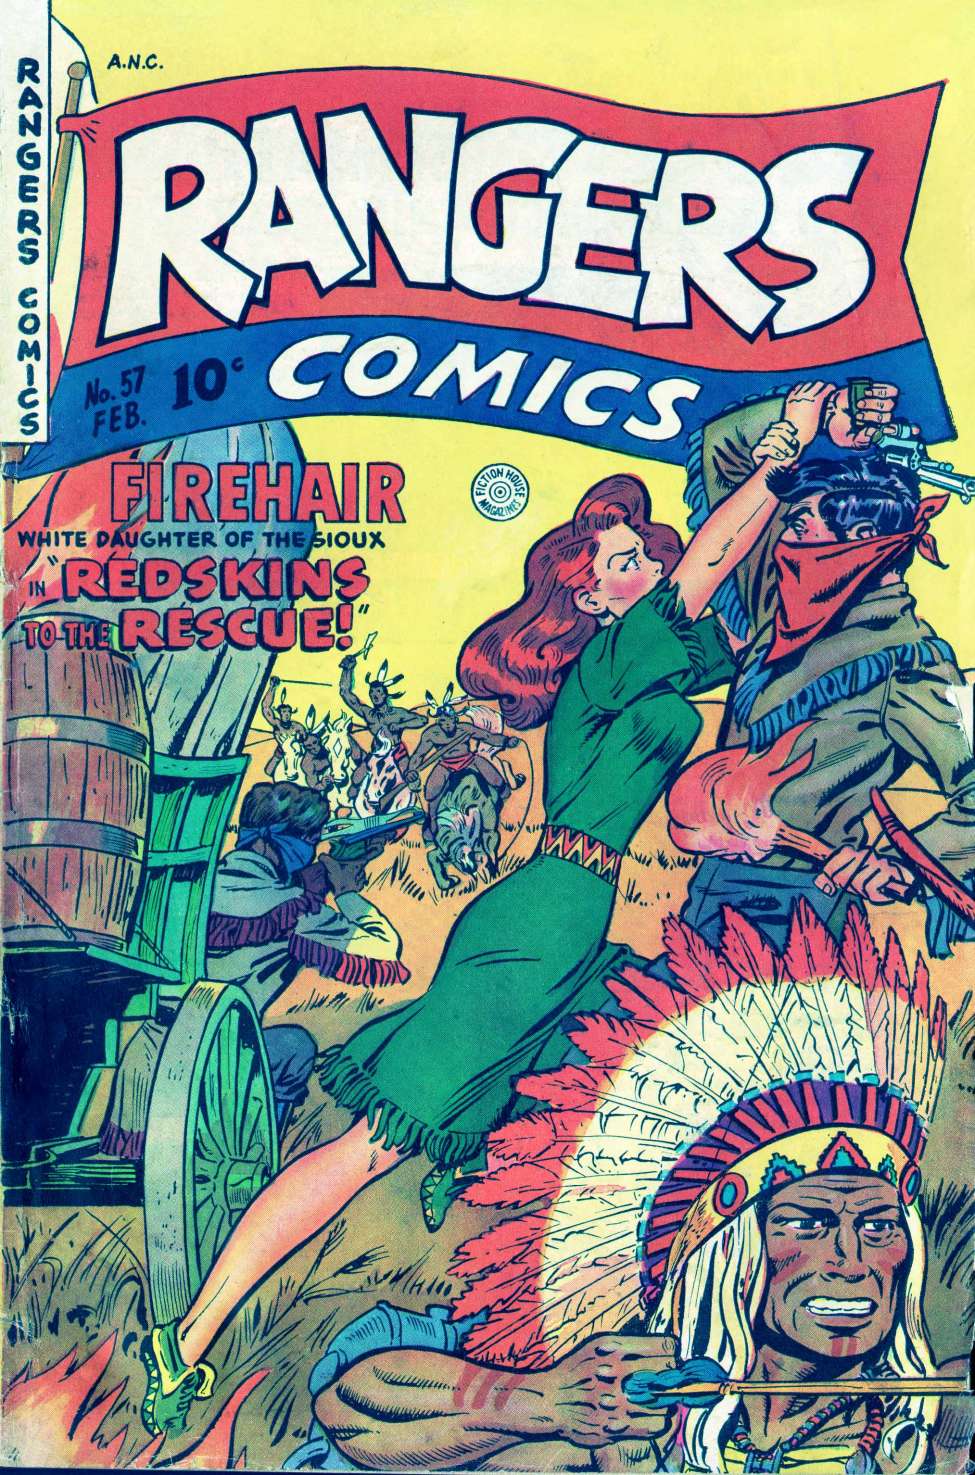 Comic Book Cover For Rangers Comics 57